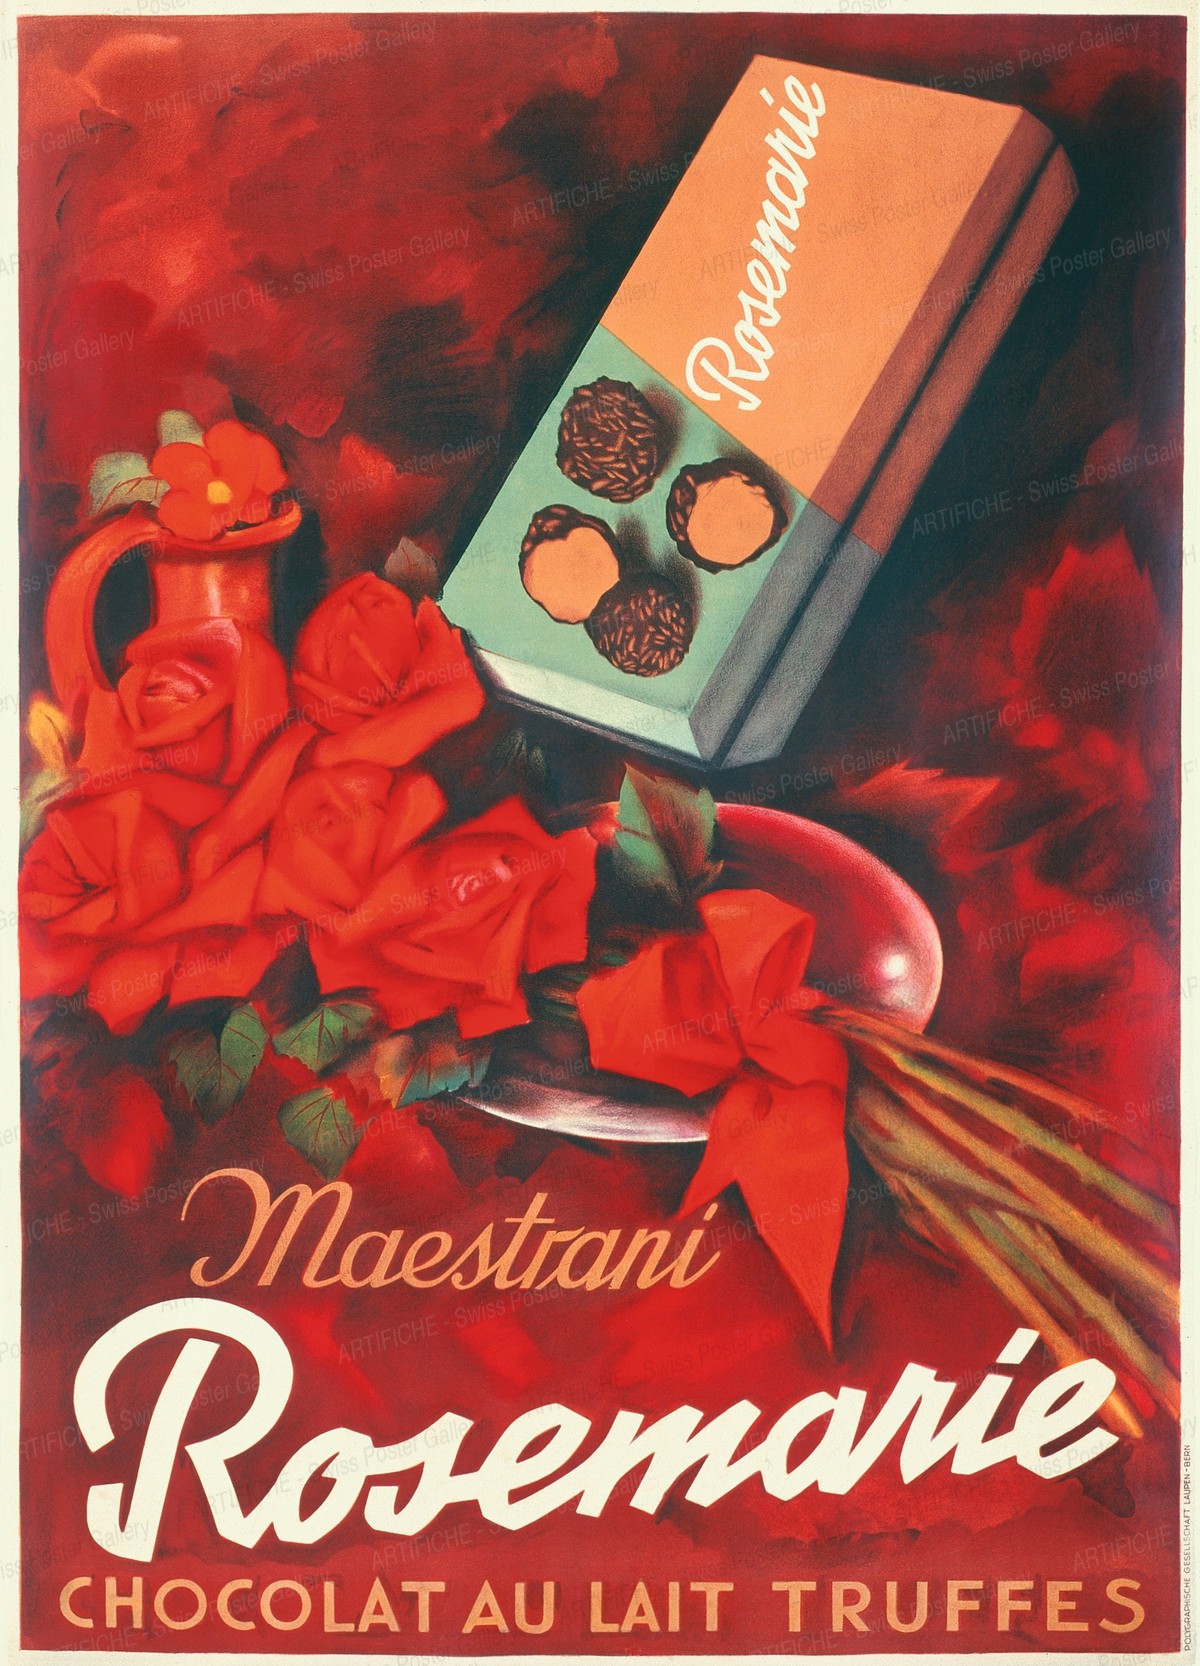 Maestrani – Rosemarie Chocolat au lait truffes, Artist unknown